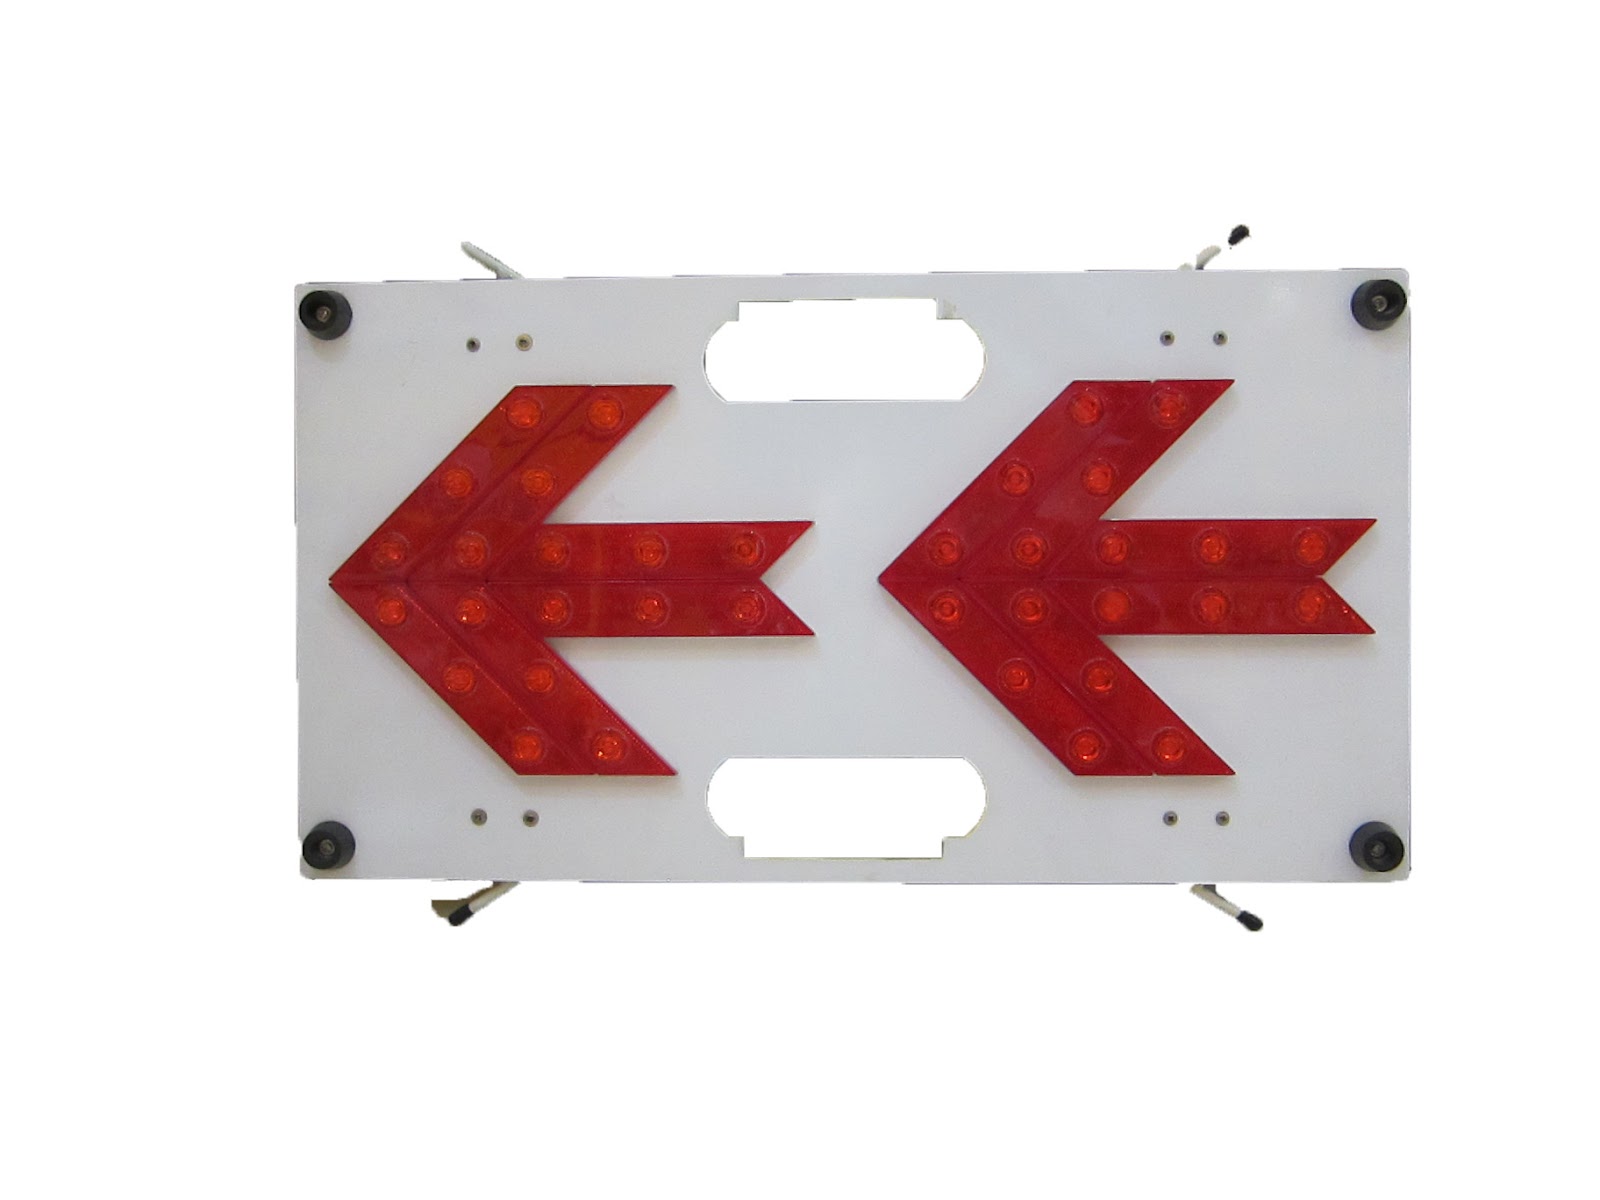  DX3 Metal 2 arrow Guide Sign Board - Two Arrow Guide Sign Board